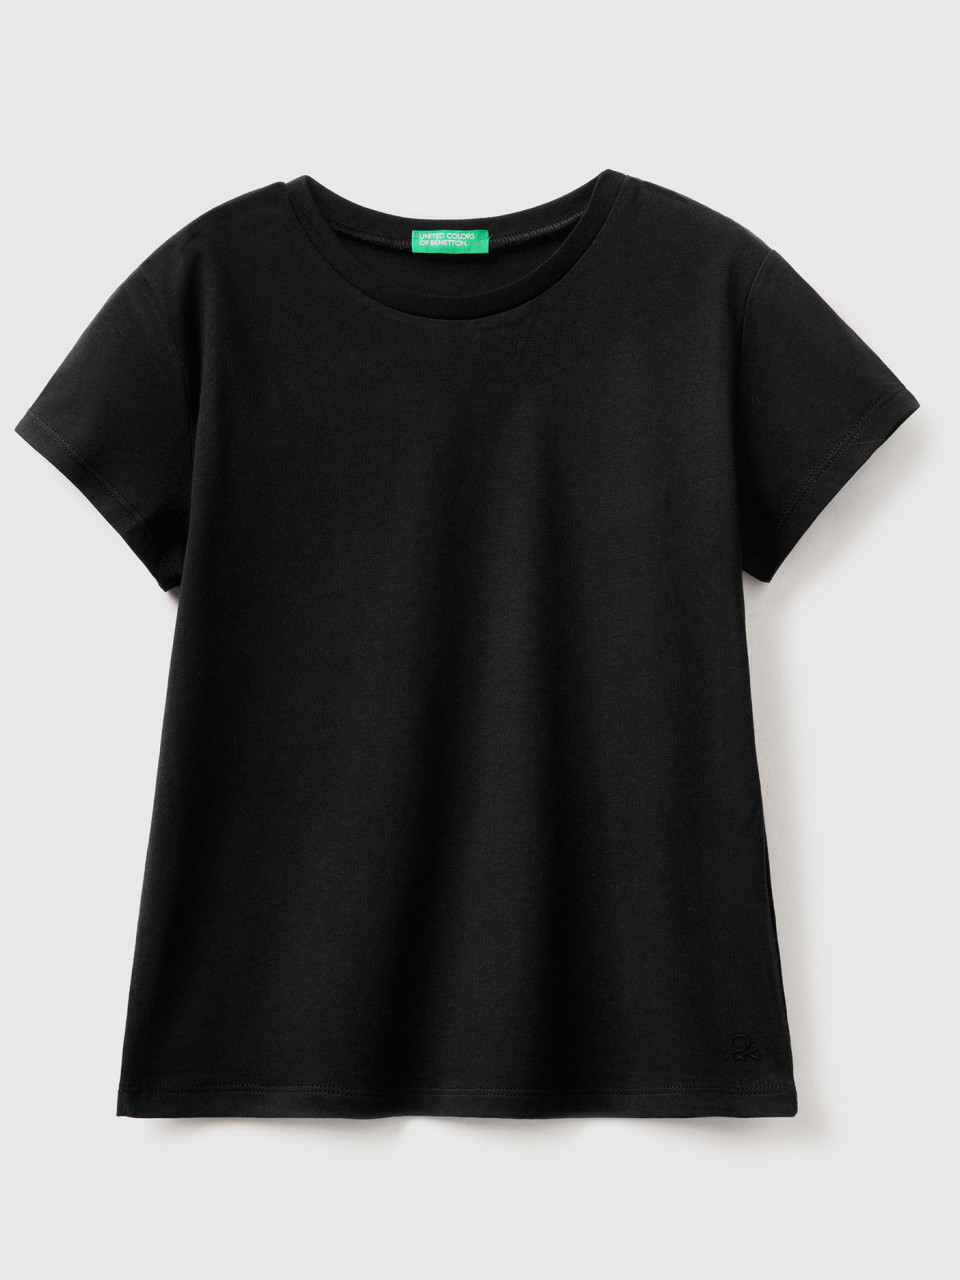 Benetton, Camiseta De 100 % Algodón Orgánico, Negro, Niños